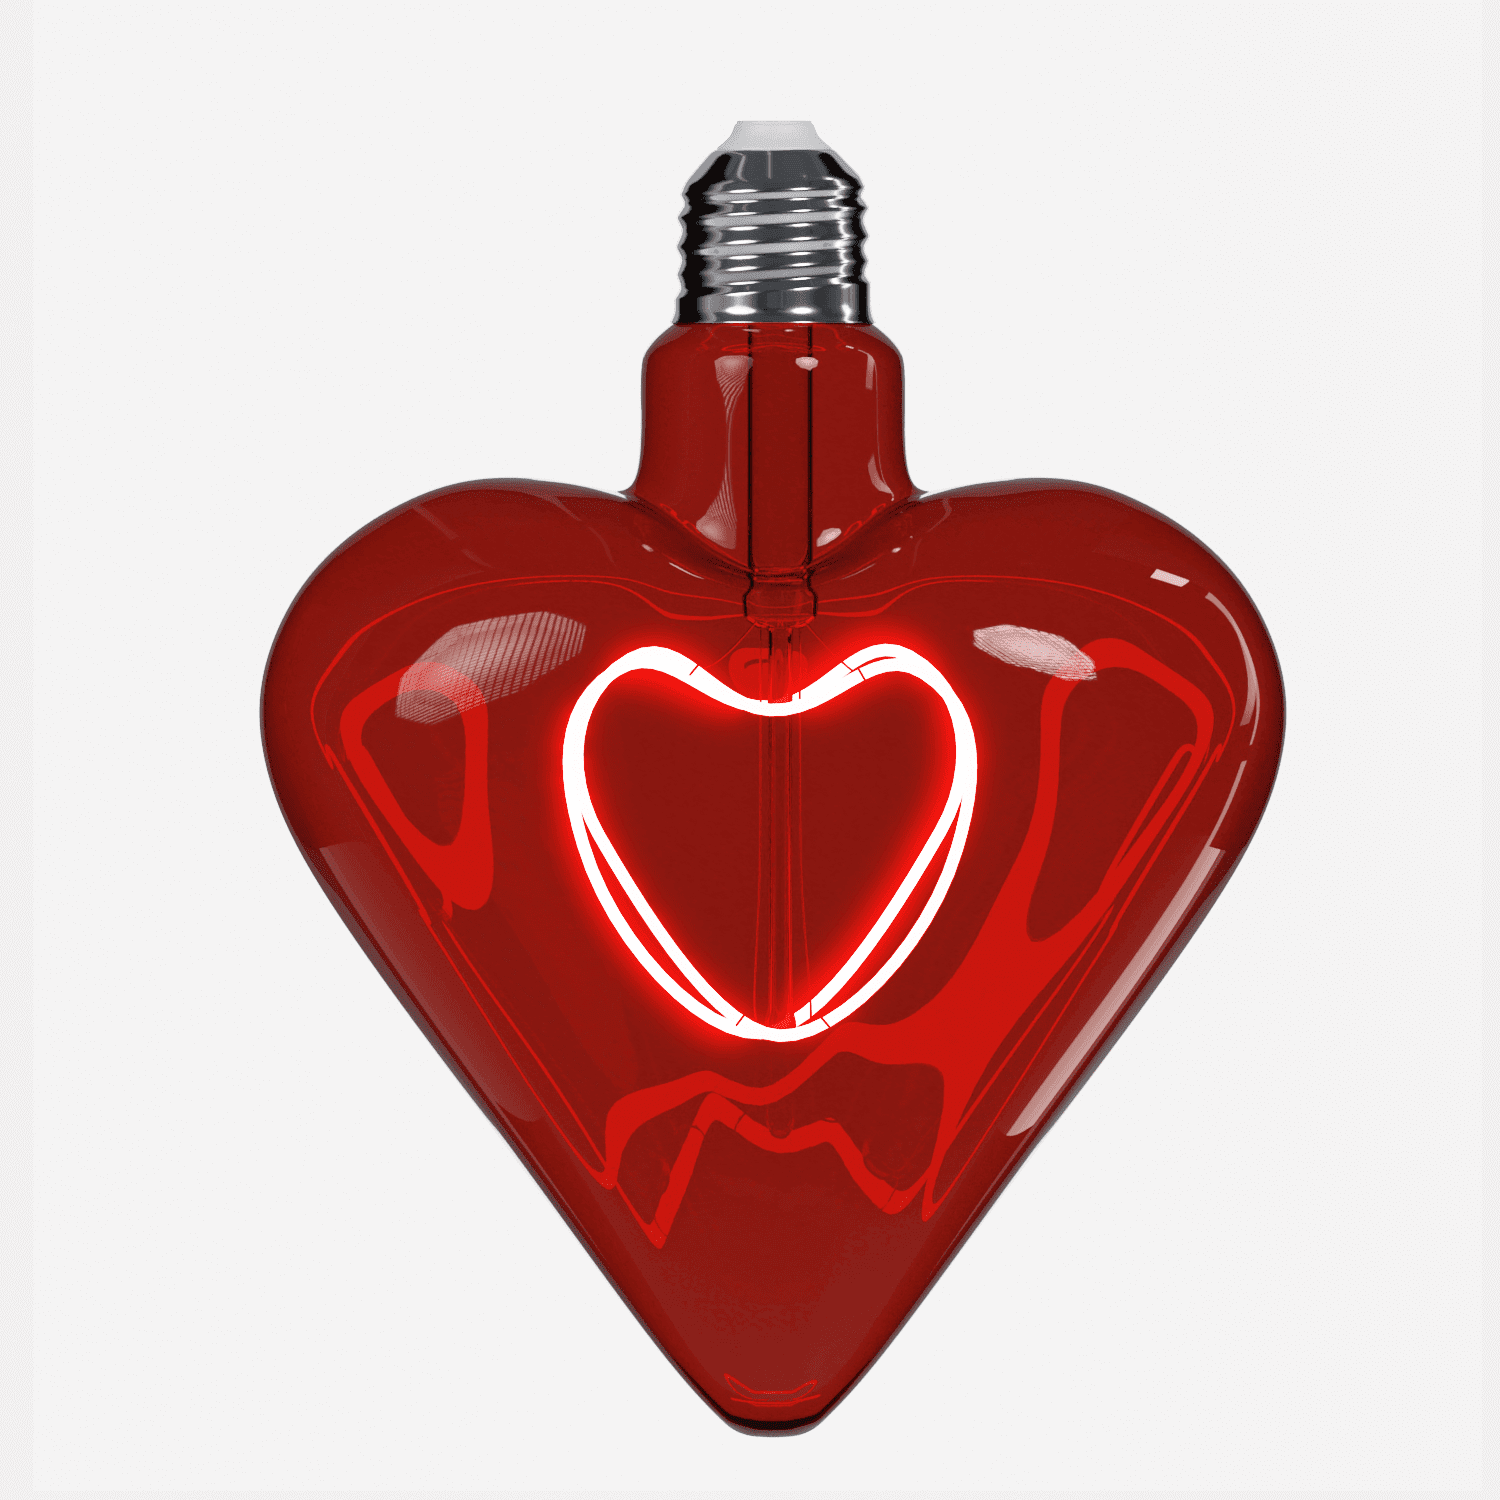 LED Bulb heart, red